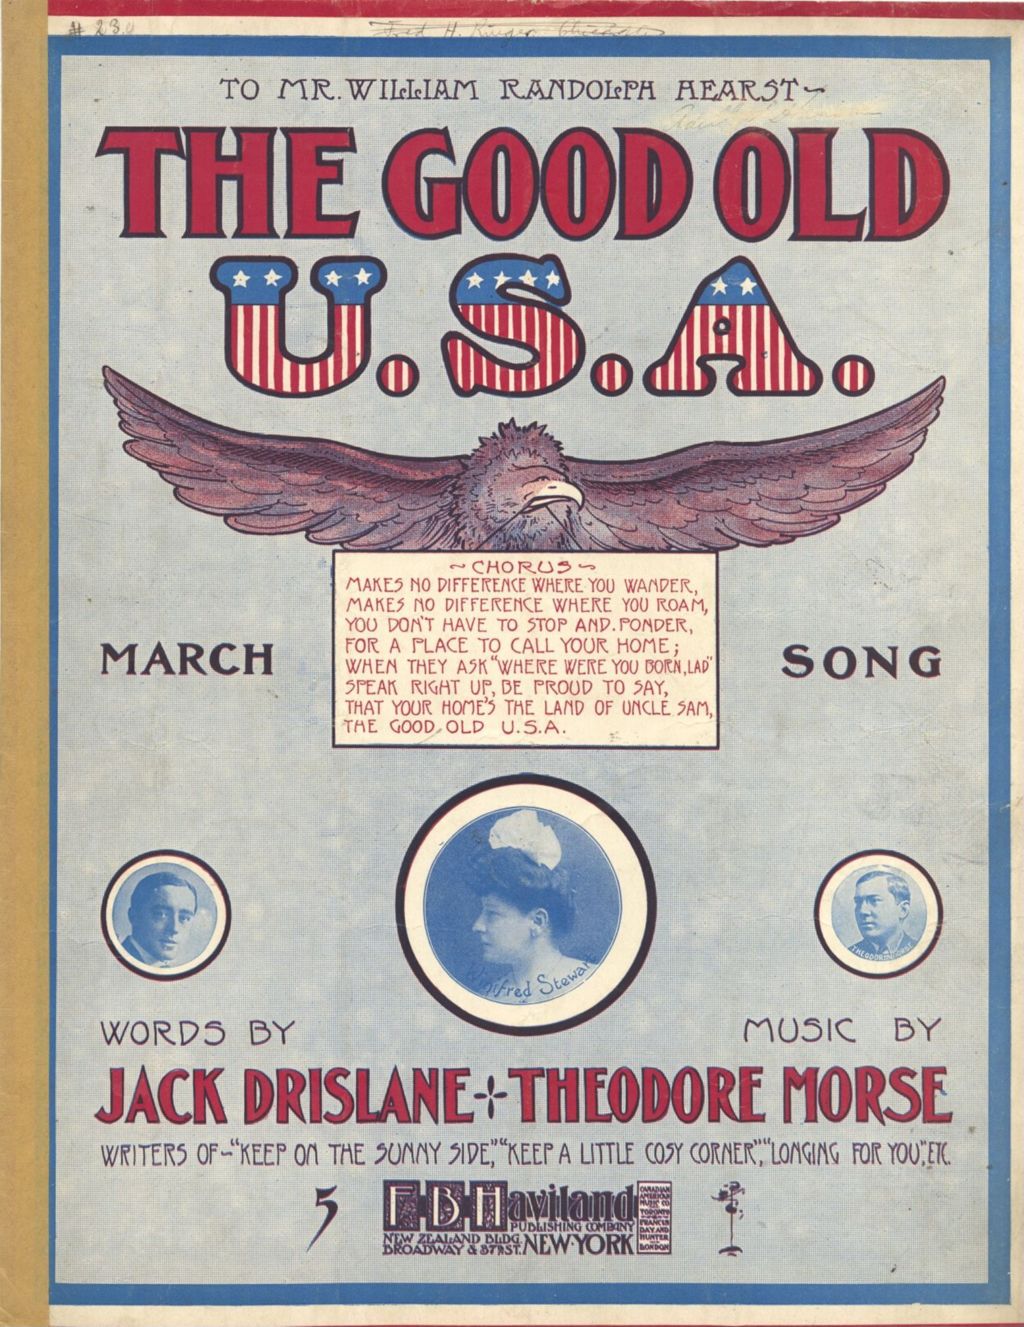 Miniature of Good Old U.S.A.